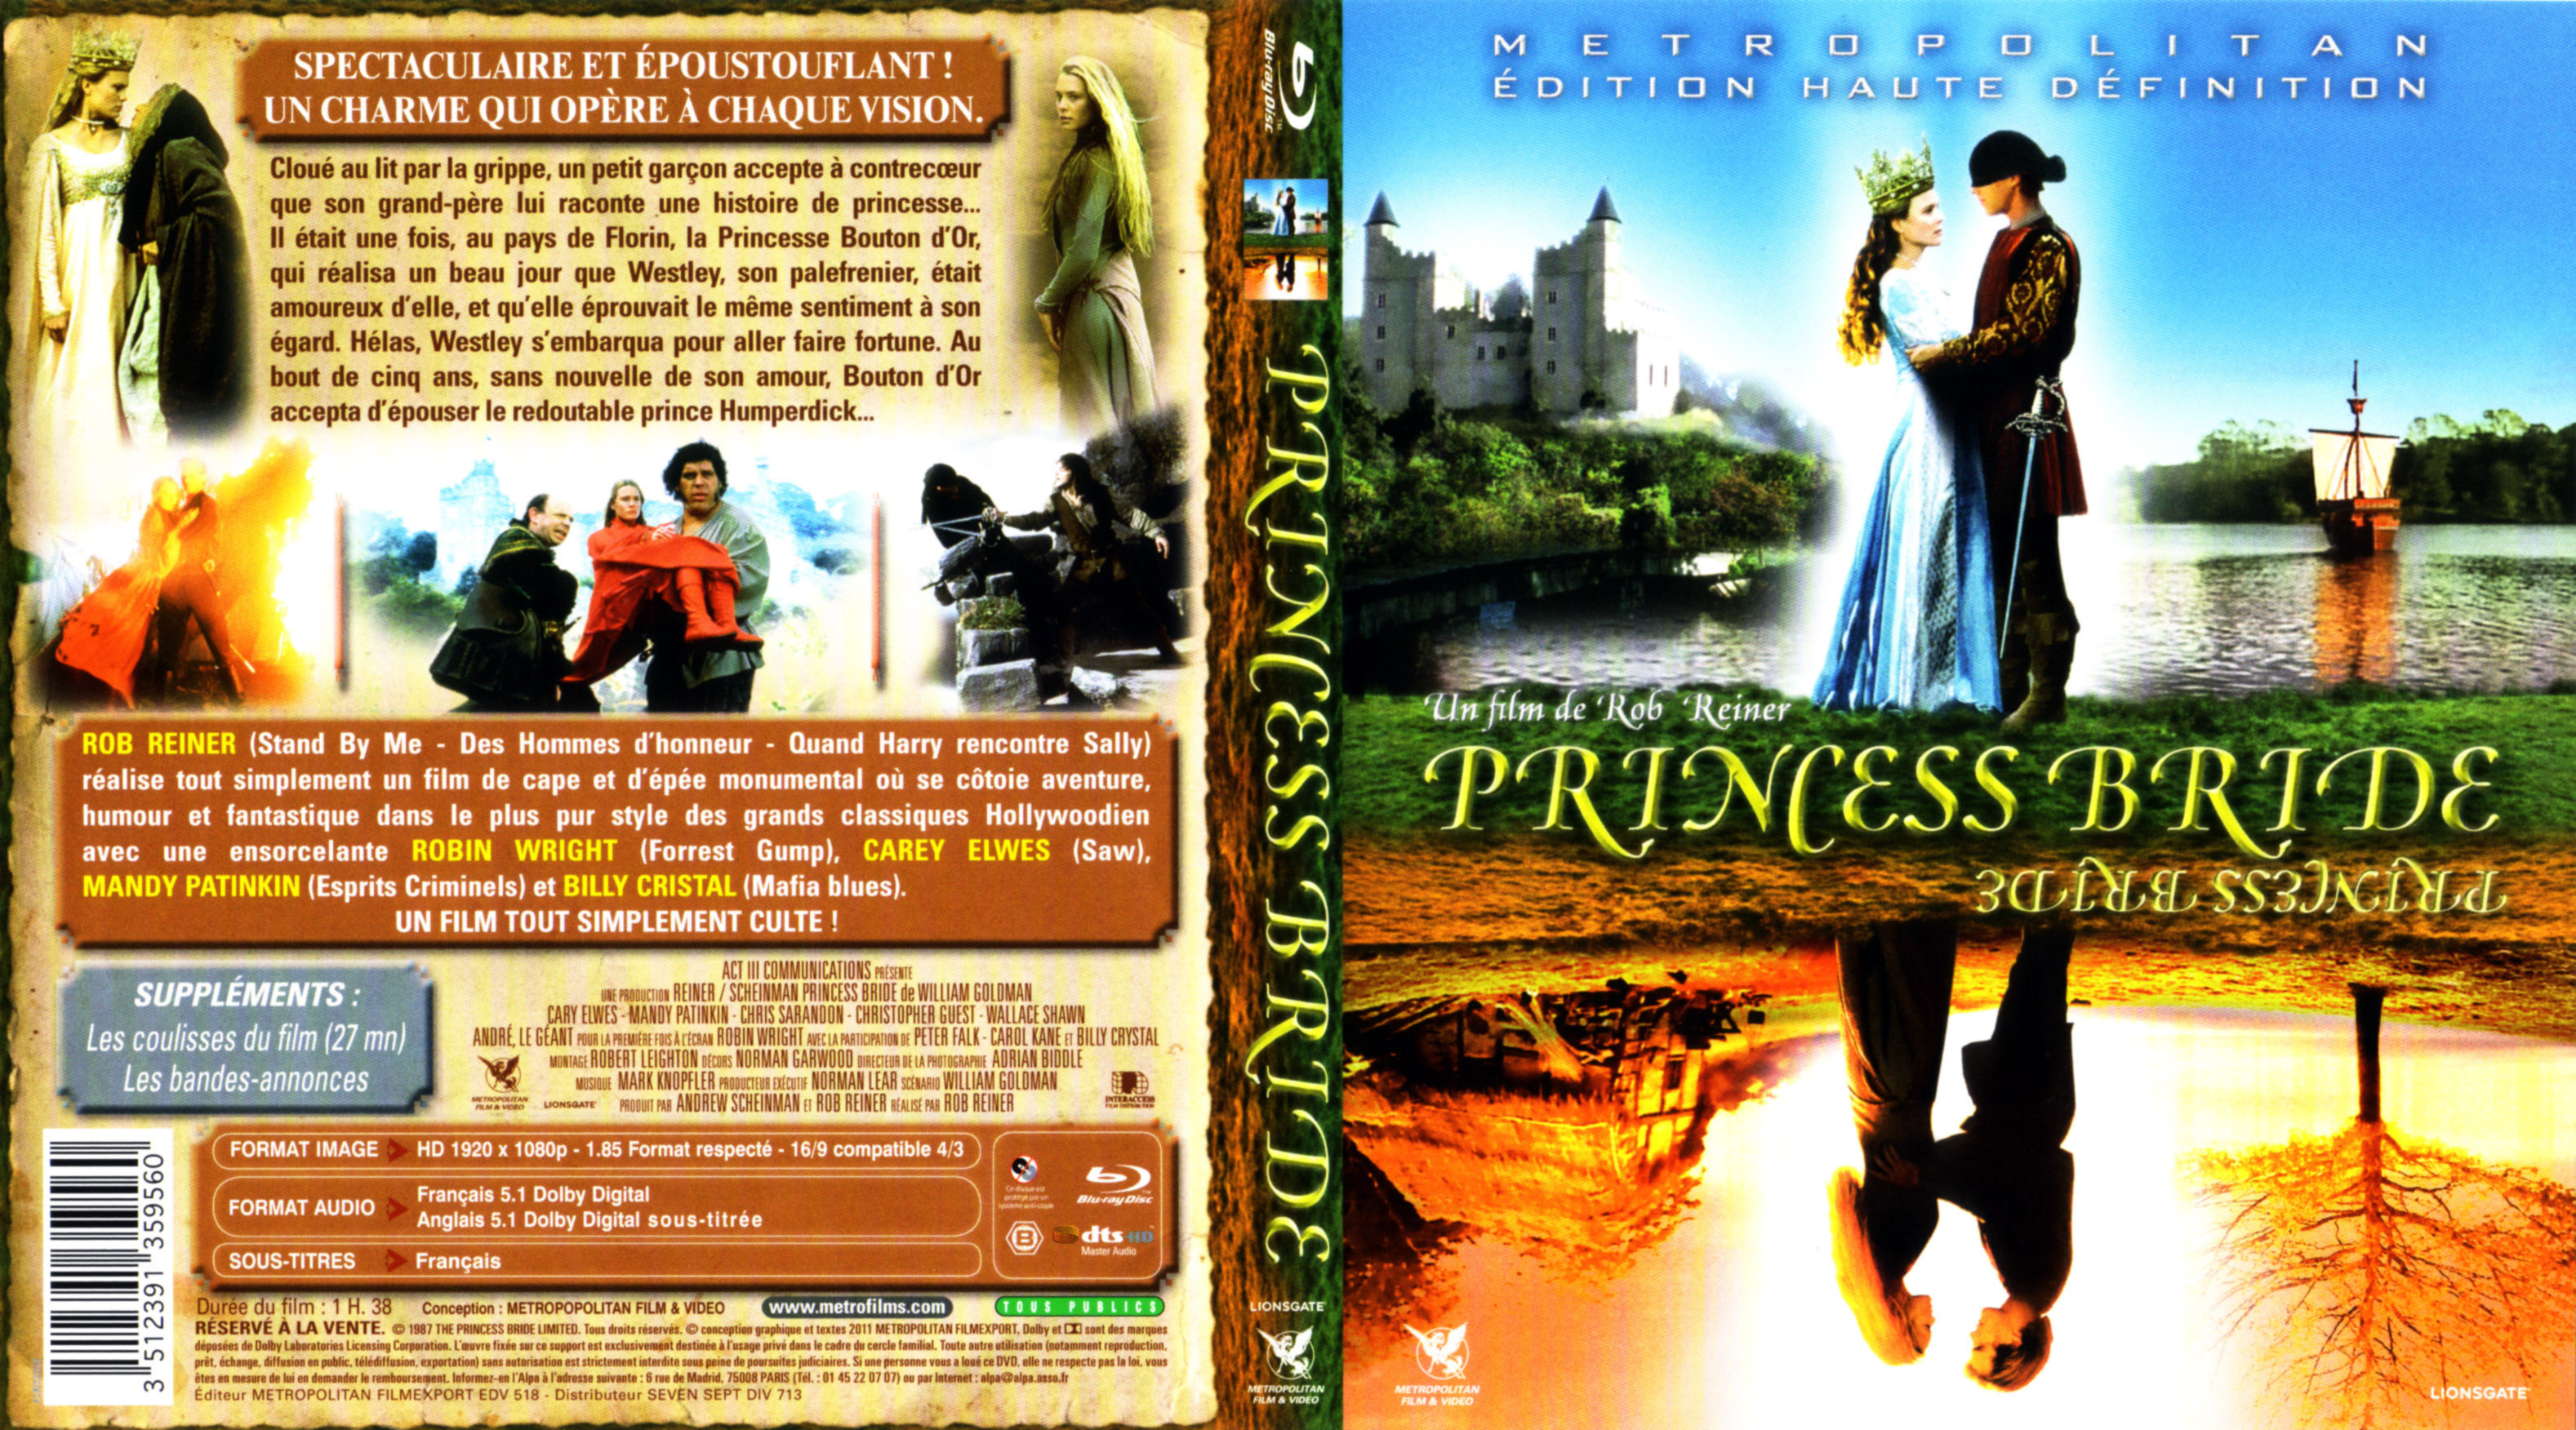 Jaquette DVD Princess bride (BLU-RAY)